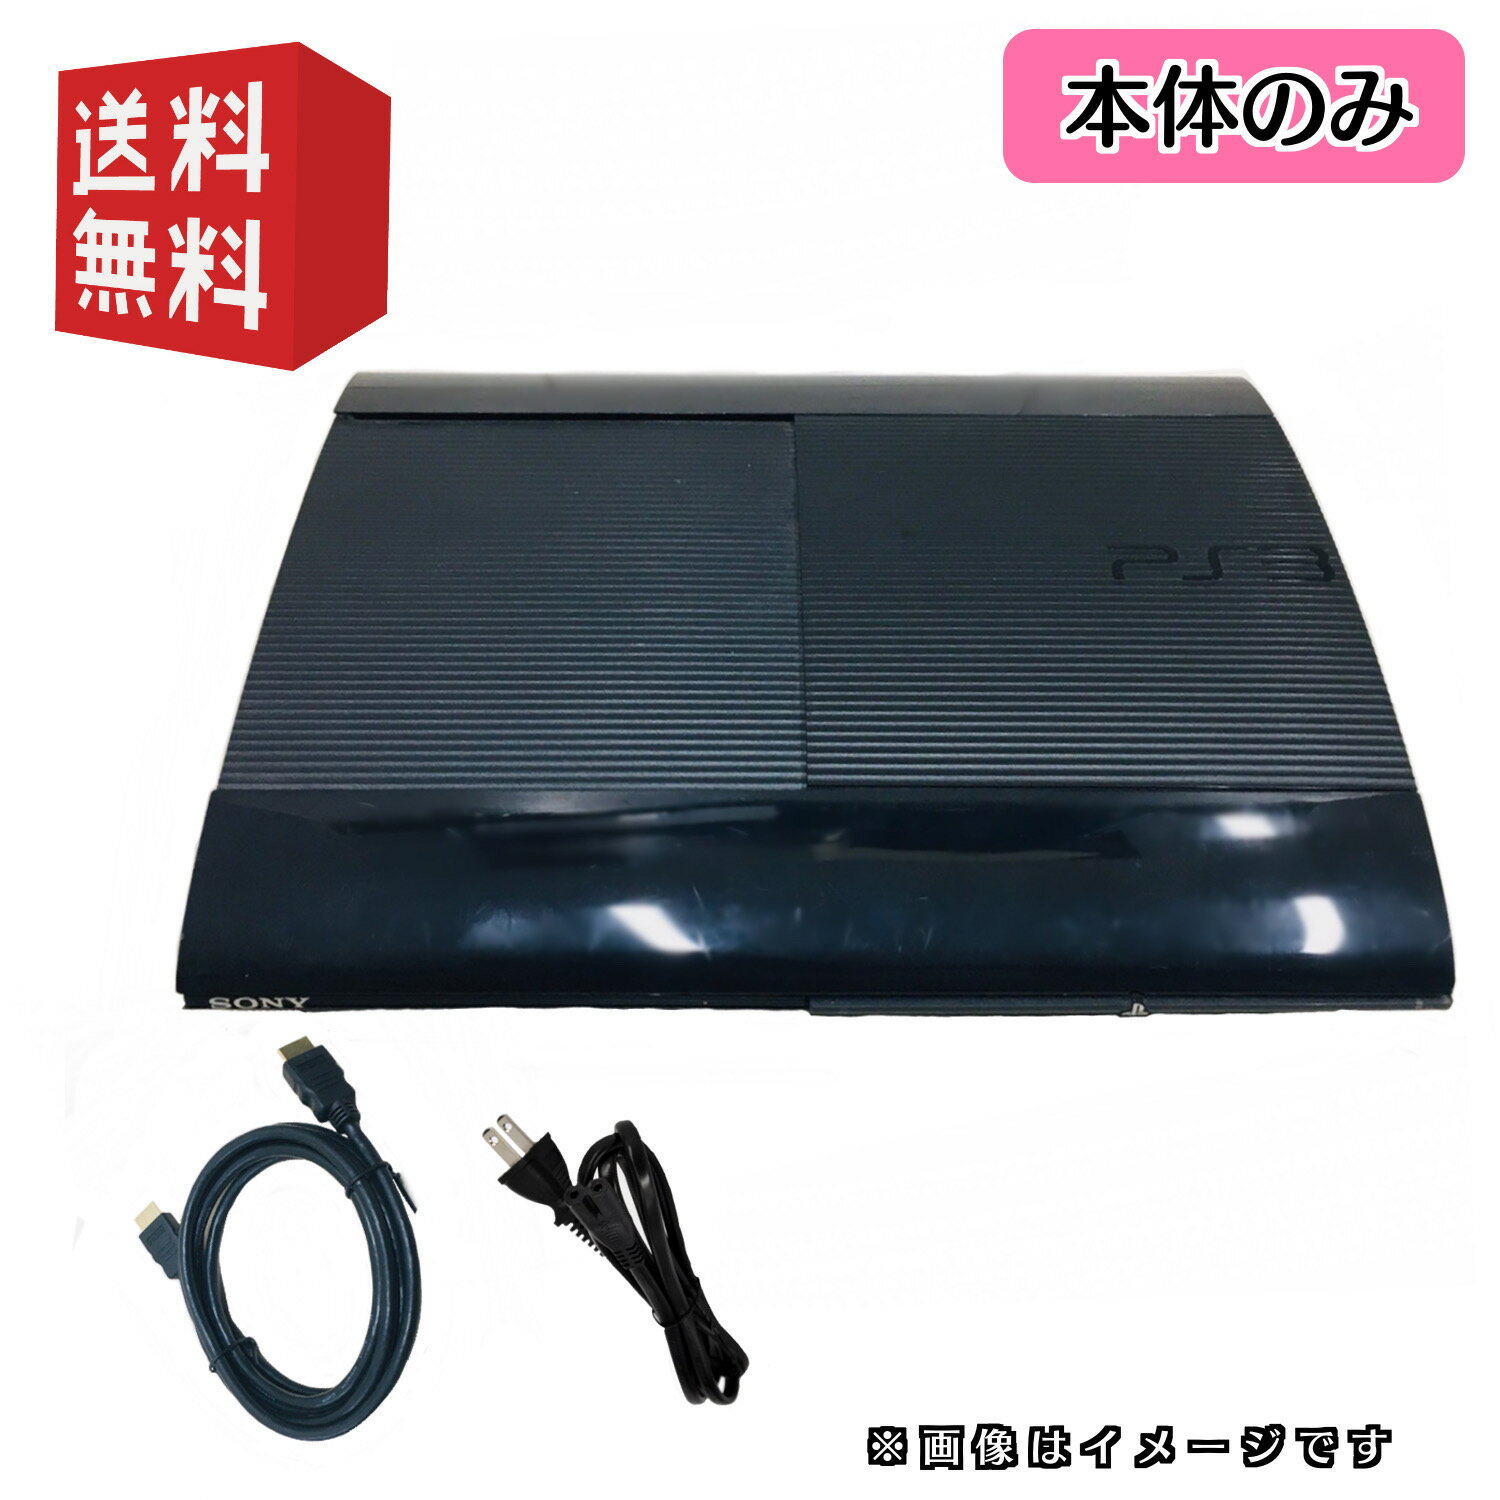 PS３ PS3 後期型 本体 【電源・HDMIケーブル付属】250GB　選べるカラー[チャコールブラック/クラシックホワイト]PlayStation 3 プレイステーション3 (CECH-4000シリーズ)